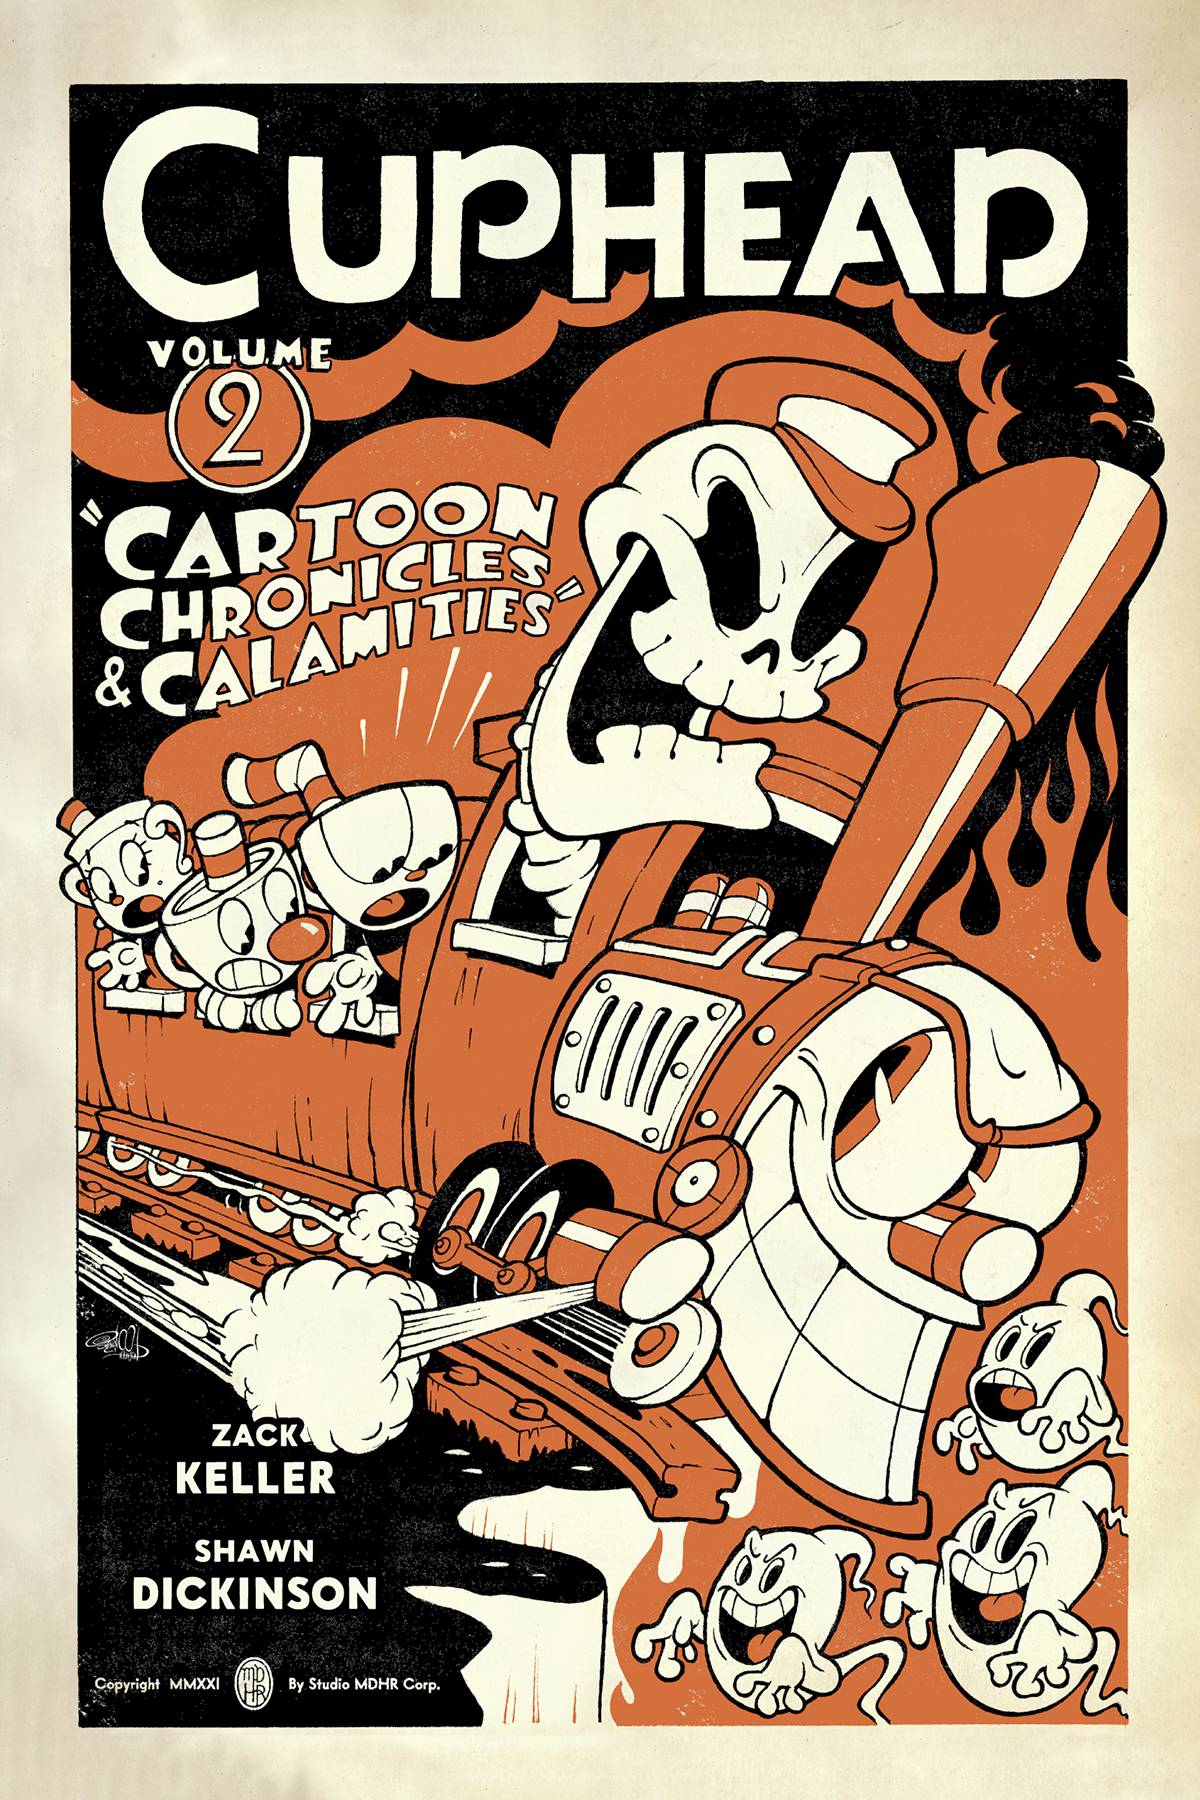 Cuphead Vol. 02 Cartoon Chronicles & Calamities